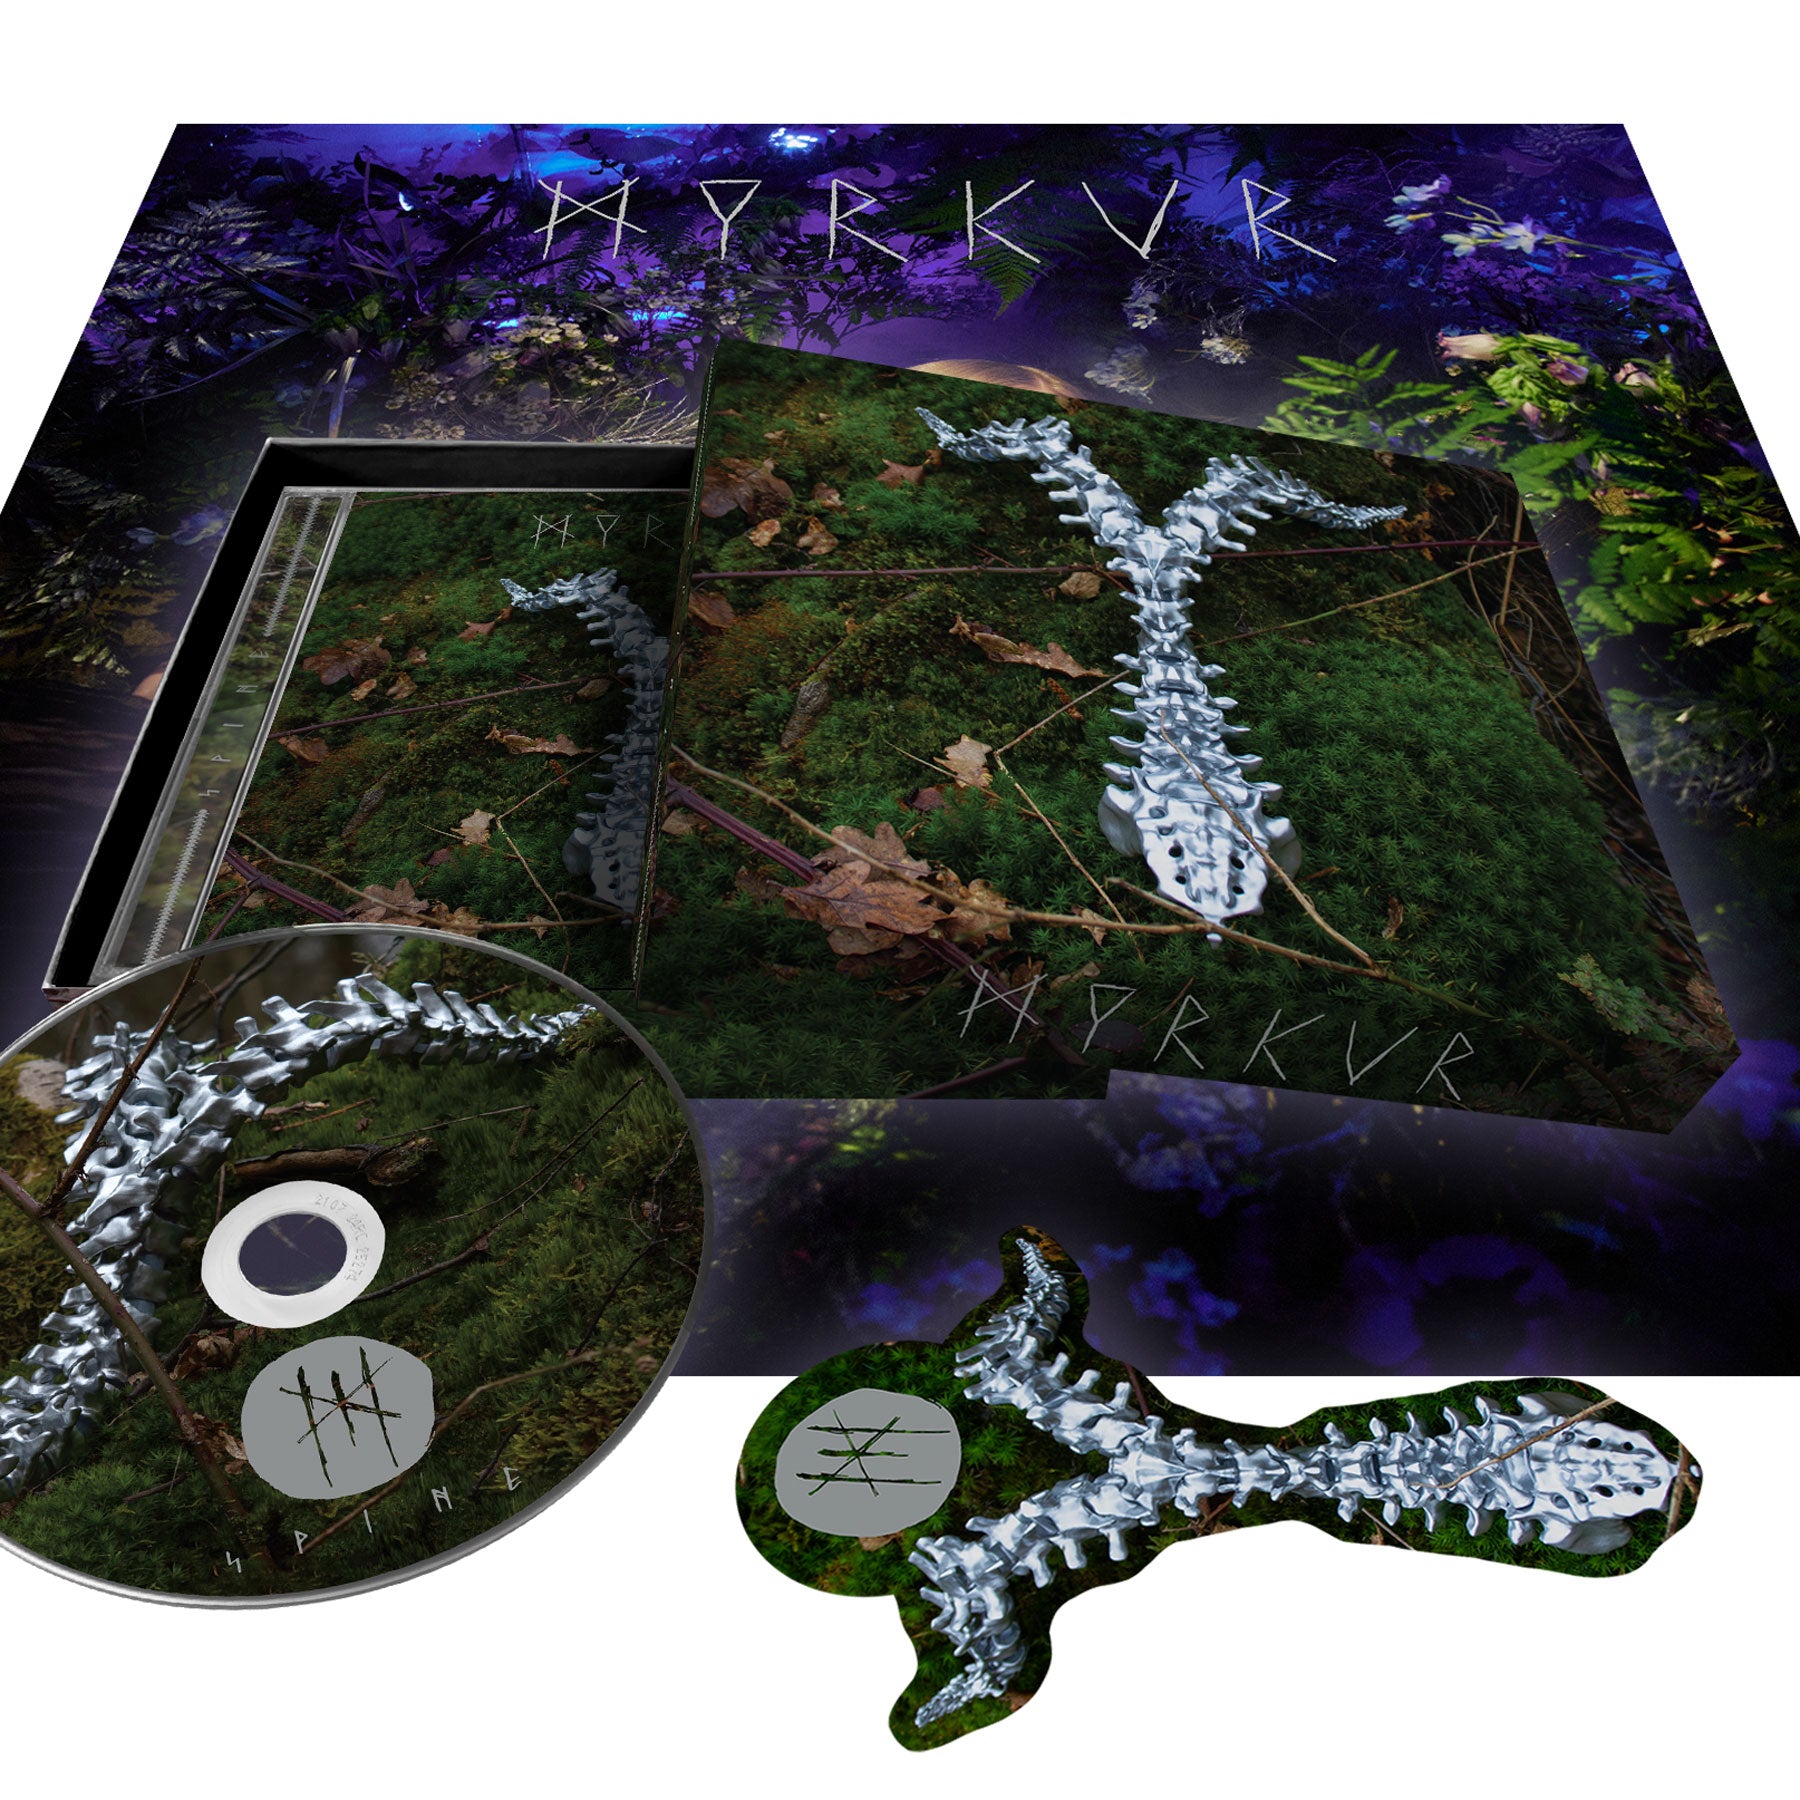 Myrkur "Spine CD Boxset" deluxe CD